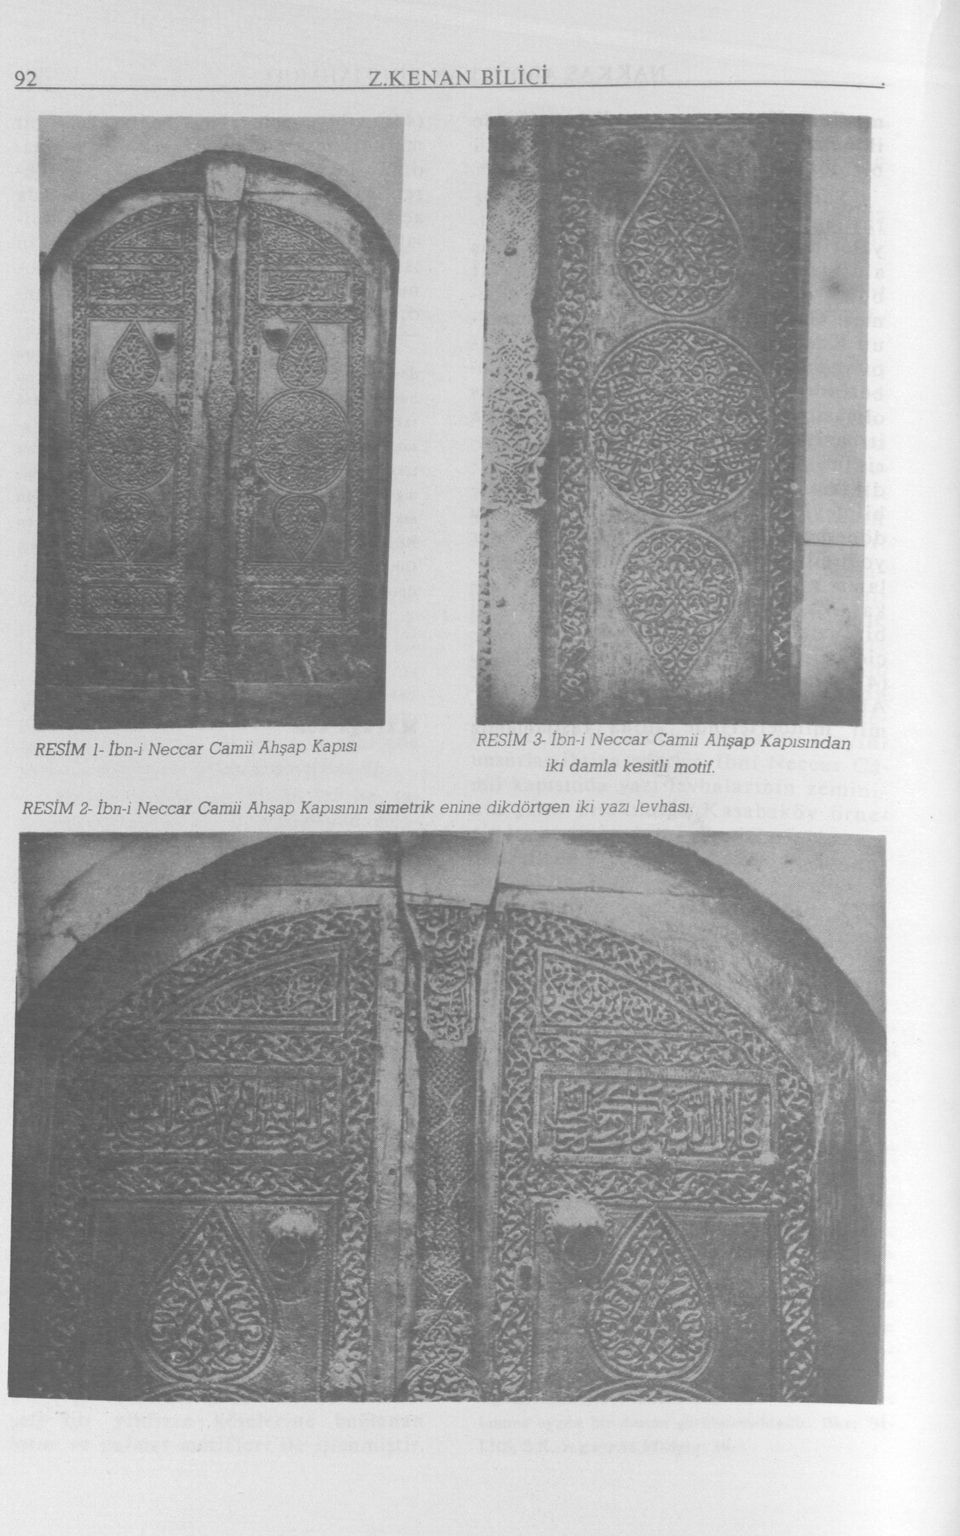 REStM 2- tbn-ı Neccar Camü Ahşap Kapısının